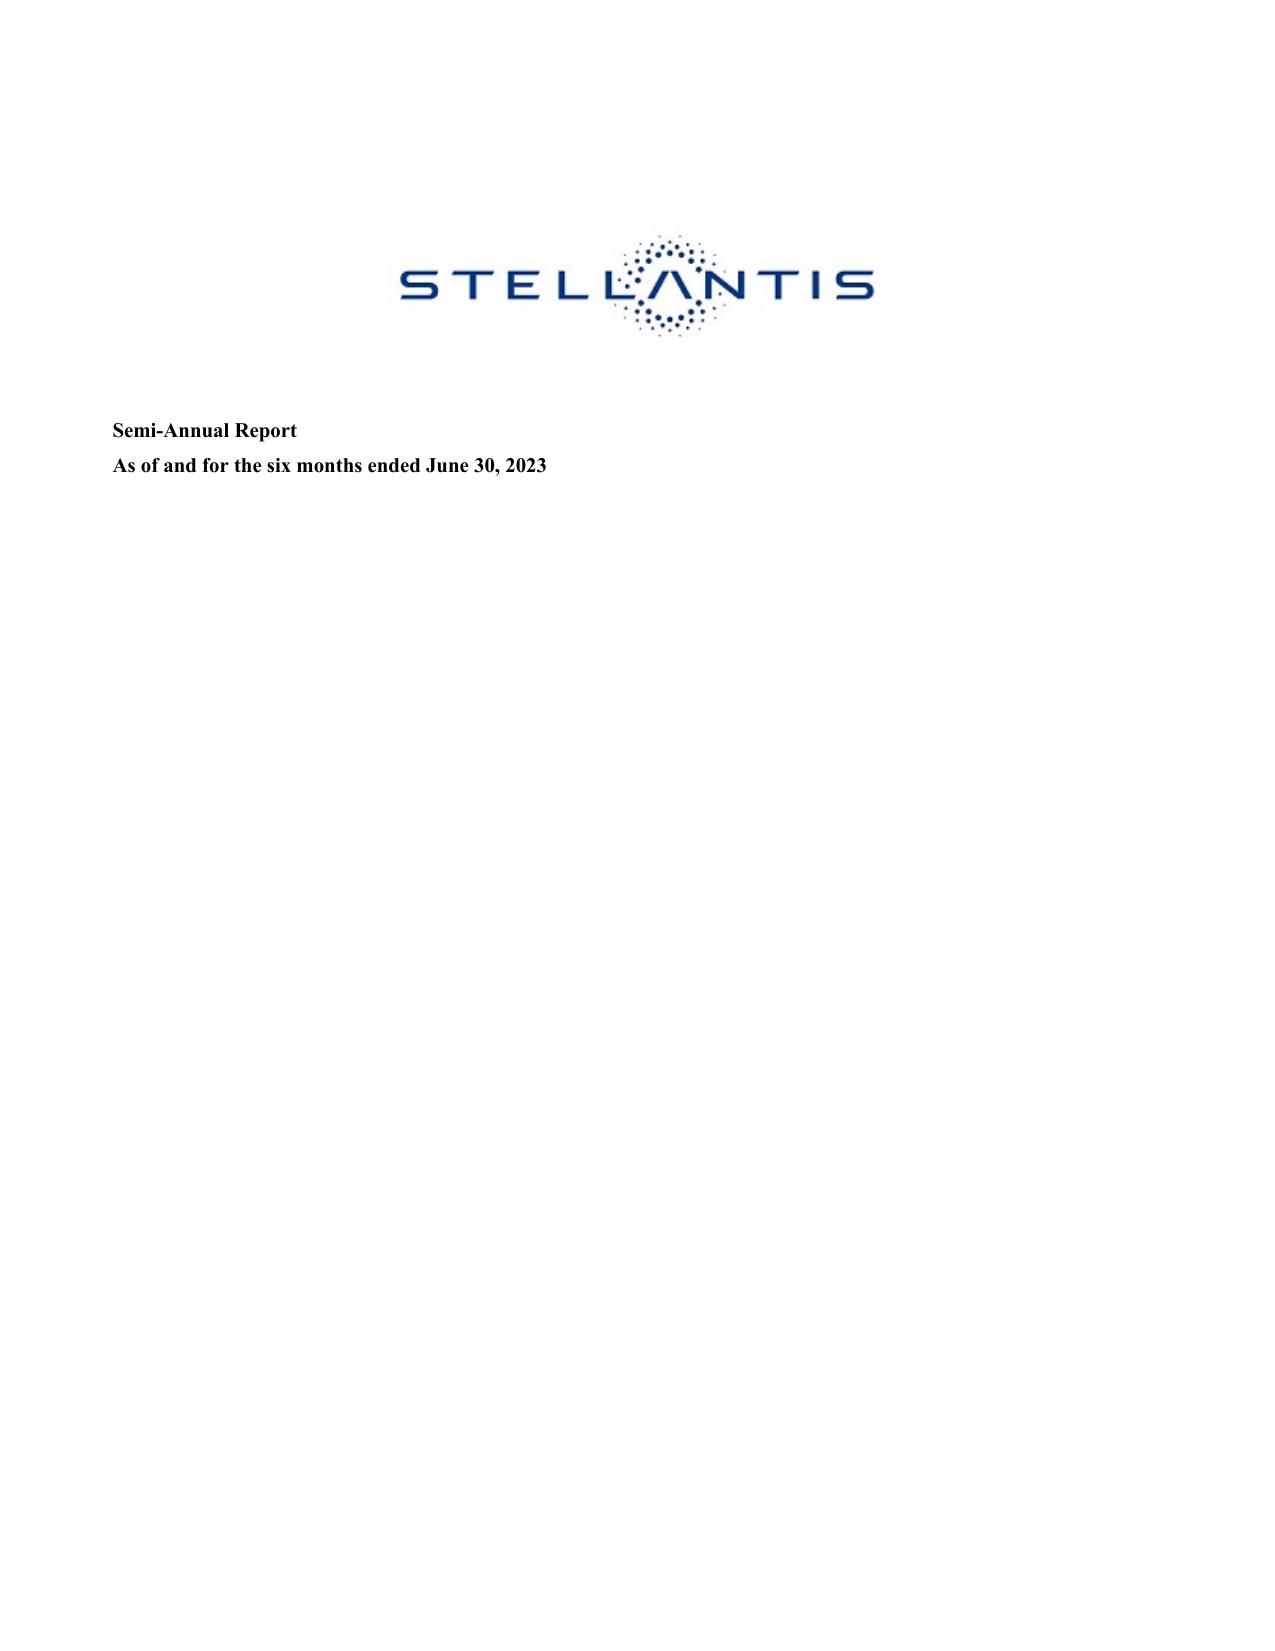 STELLANTIS 2023 Annual Report